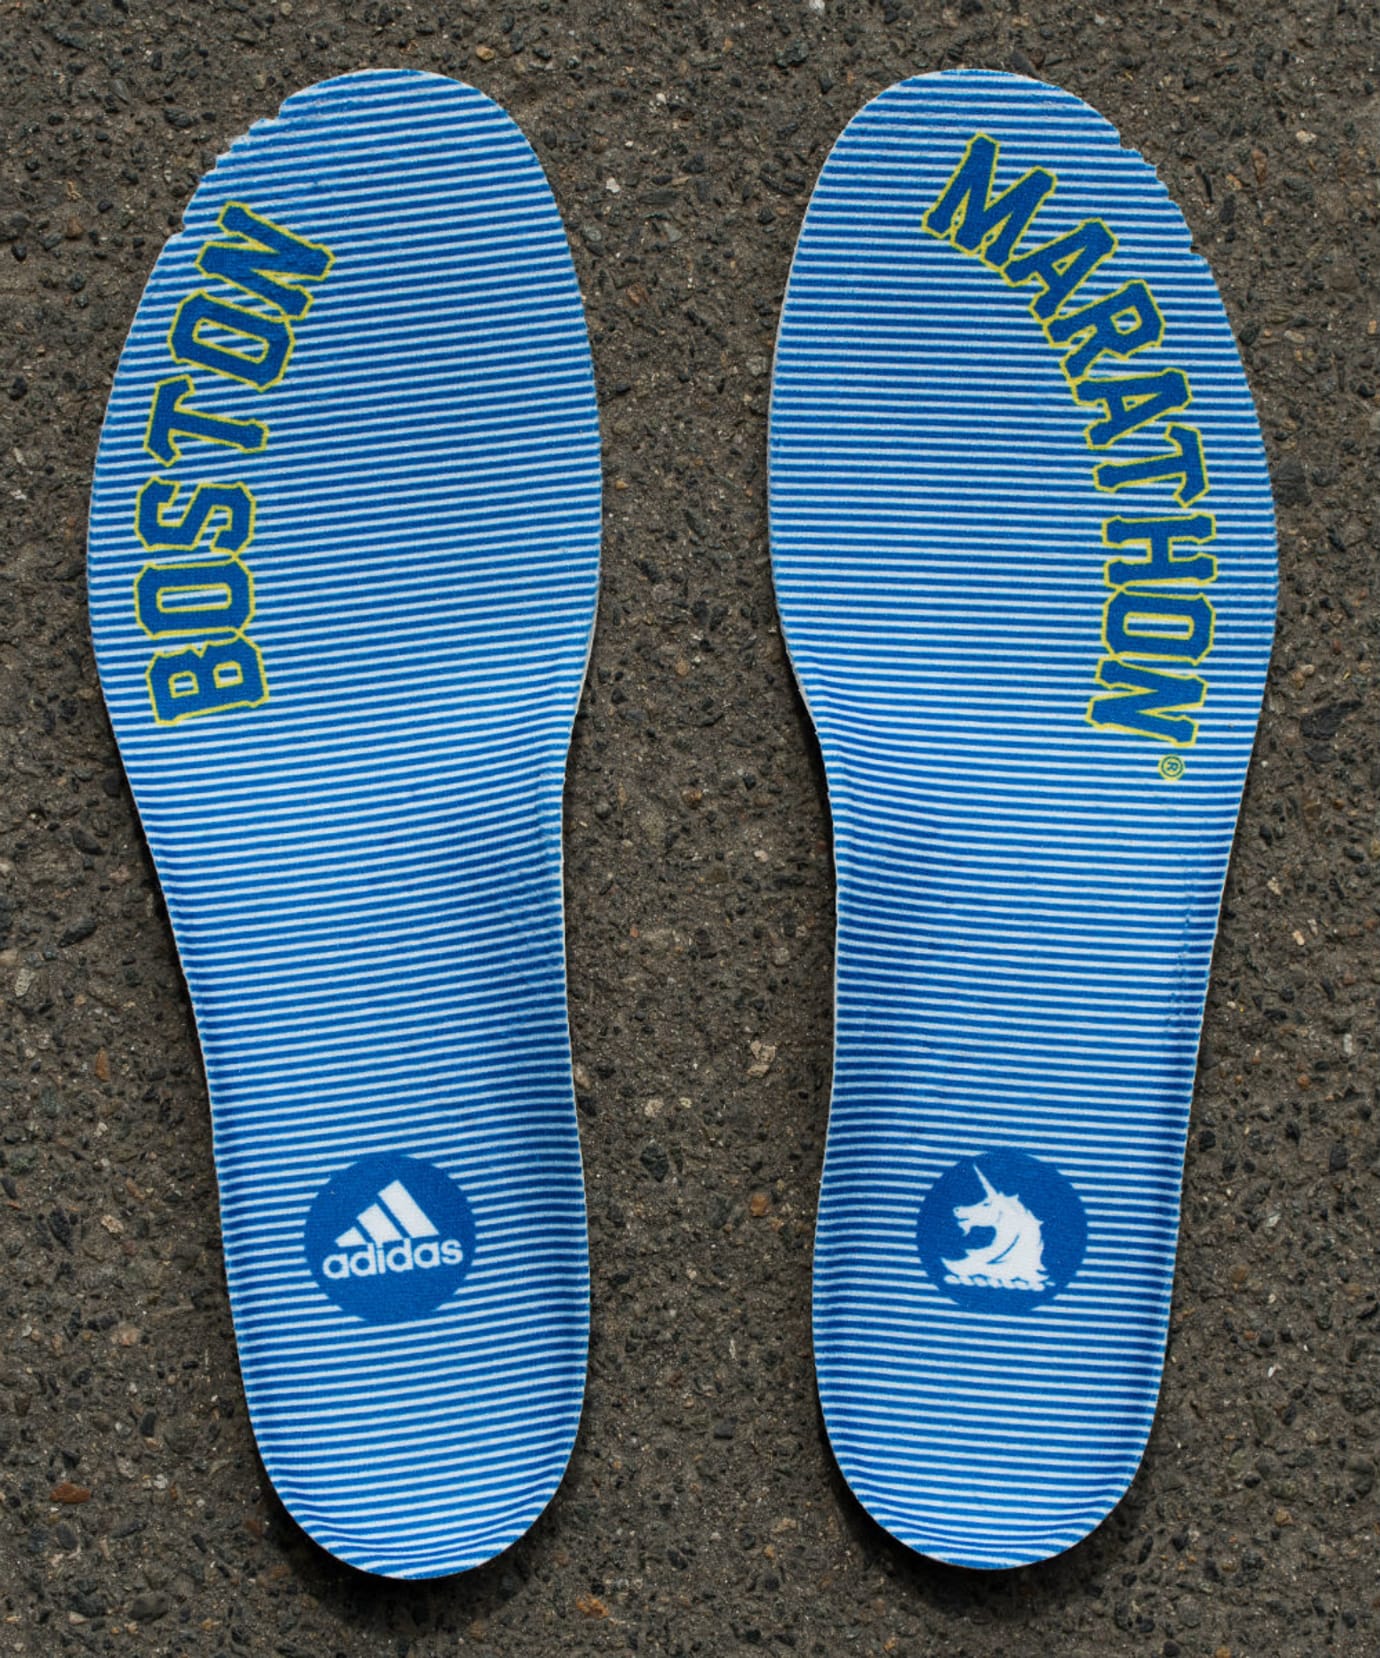 Adidas Adizero Adios Boston Marathon 2017 Release Date | Sole Collector